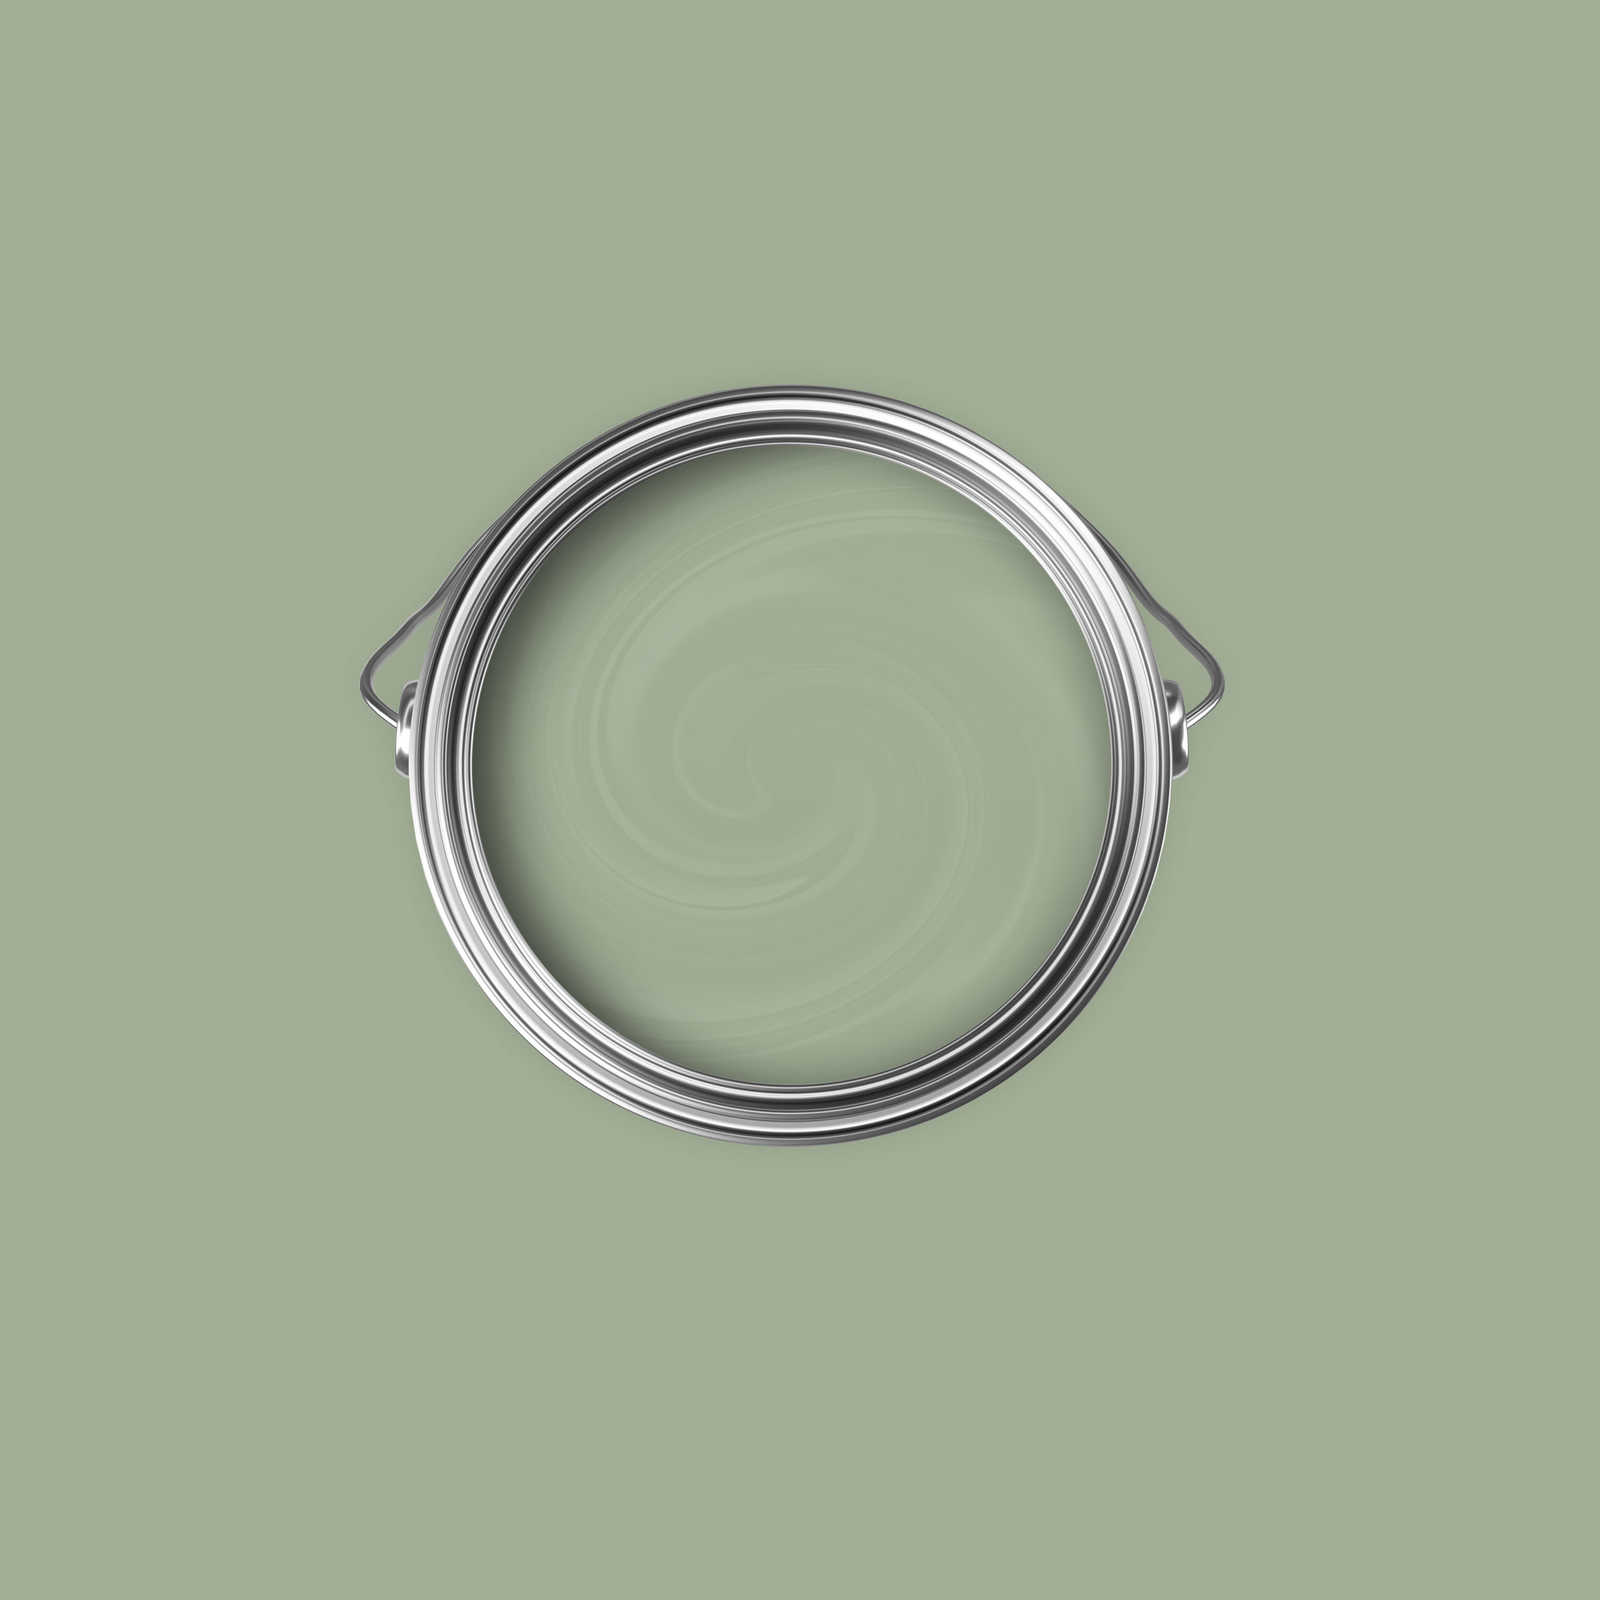             Premium Wandfarbe erdendes Olivgrün »Gorgeous Green« NW502 – 2,5 Liter
        